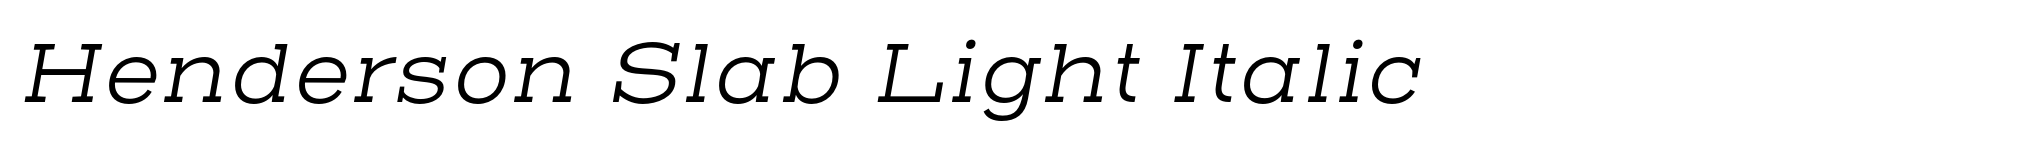 Henderson Slab Light Italic image